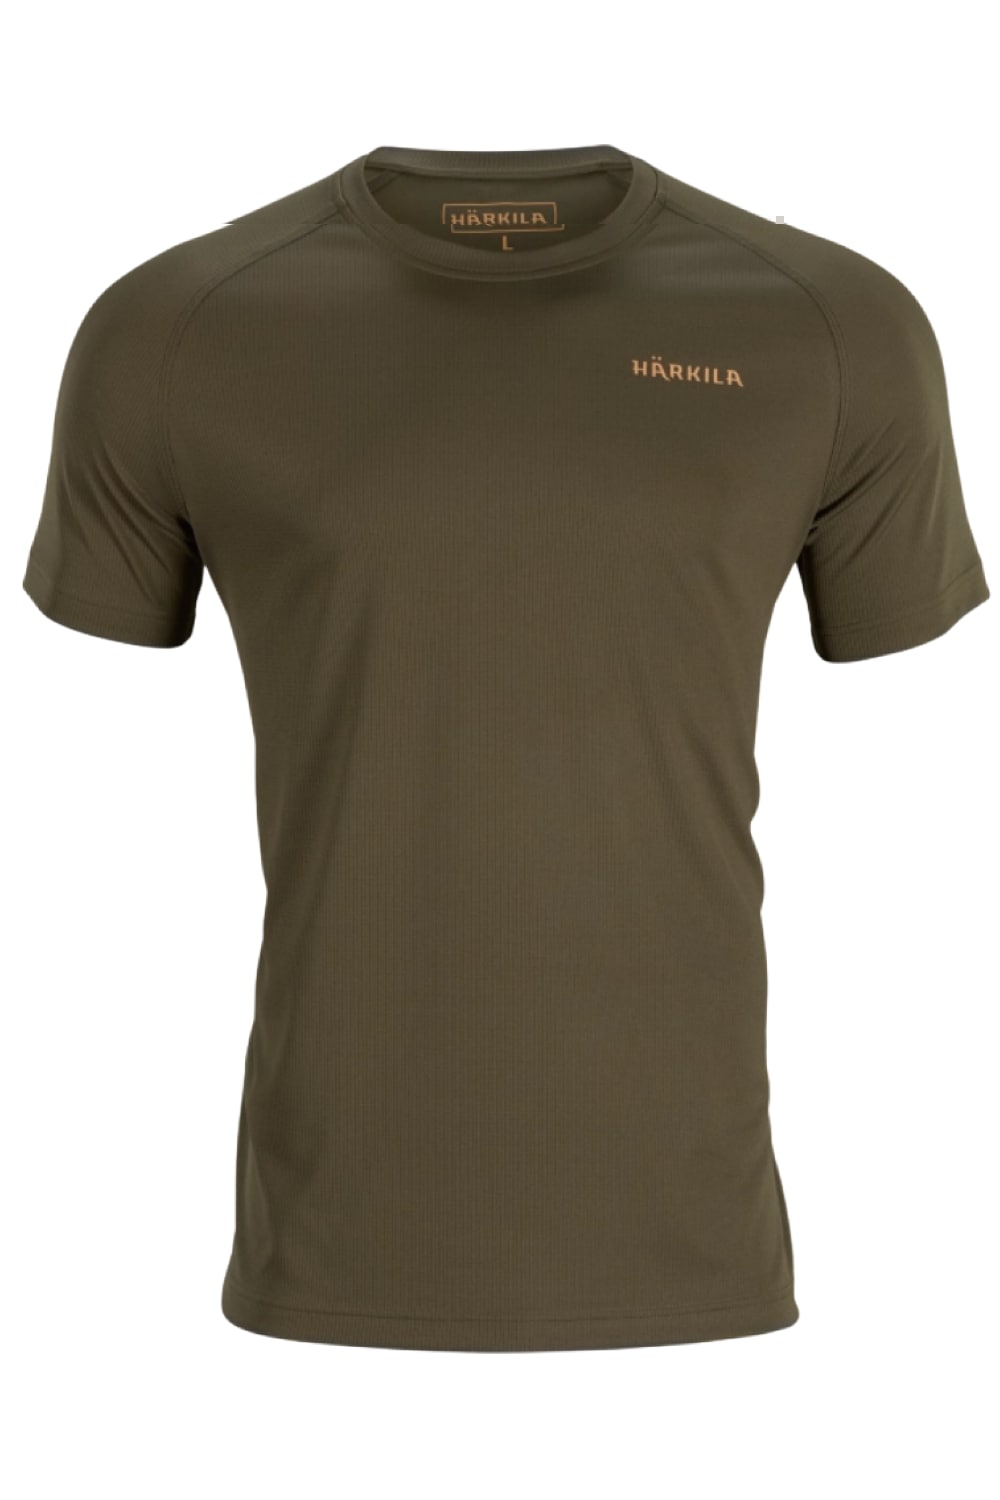 Harkila Trail Short Sleeve T-Shirt in Willow Green